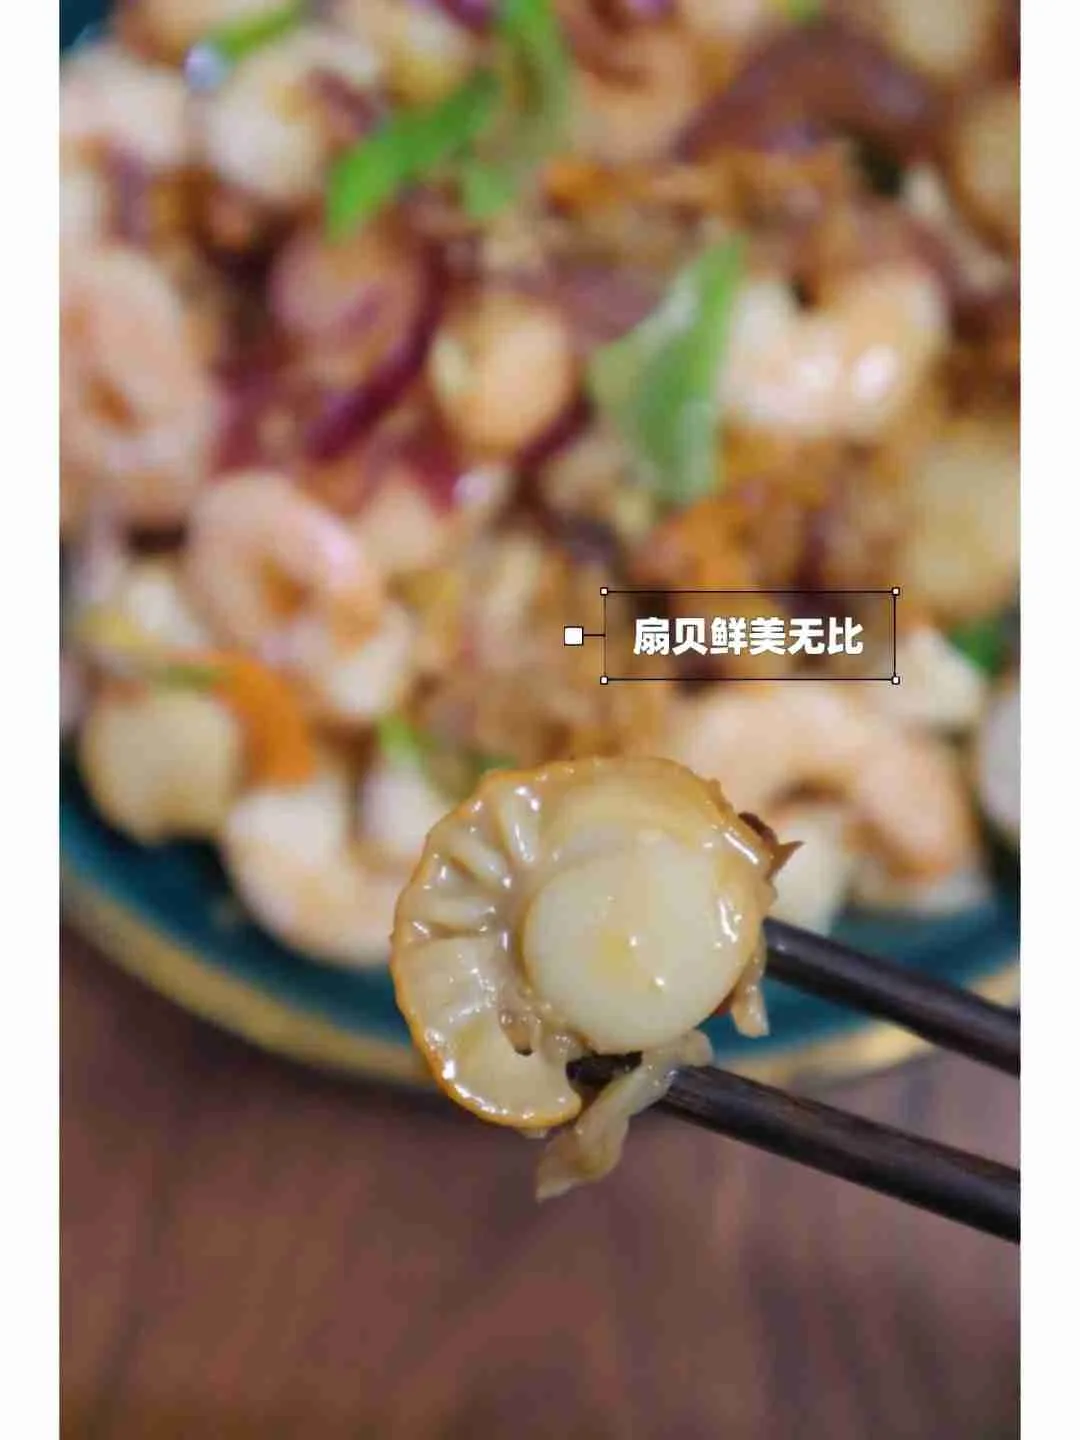 shrimp and scallop recipes